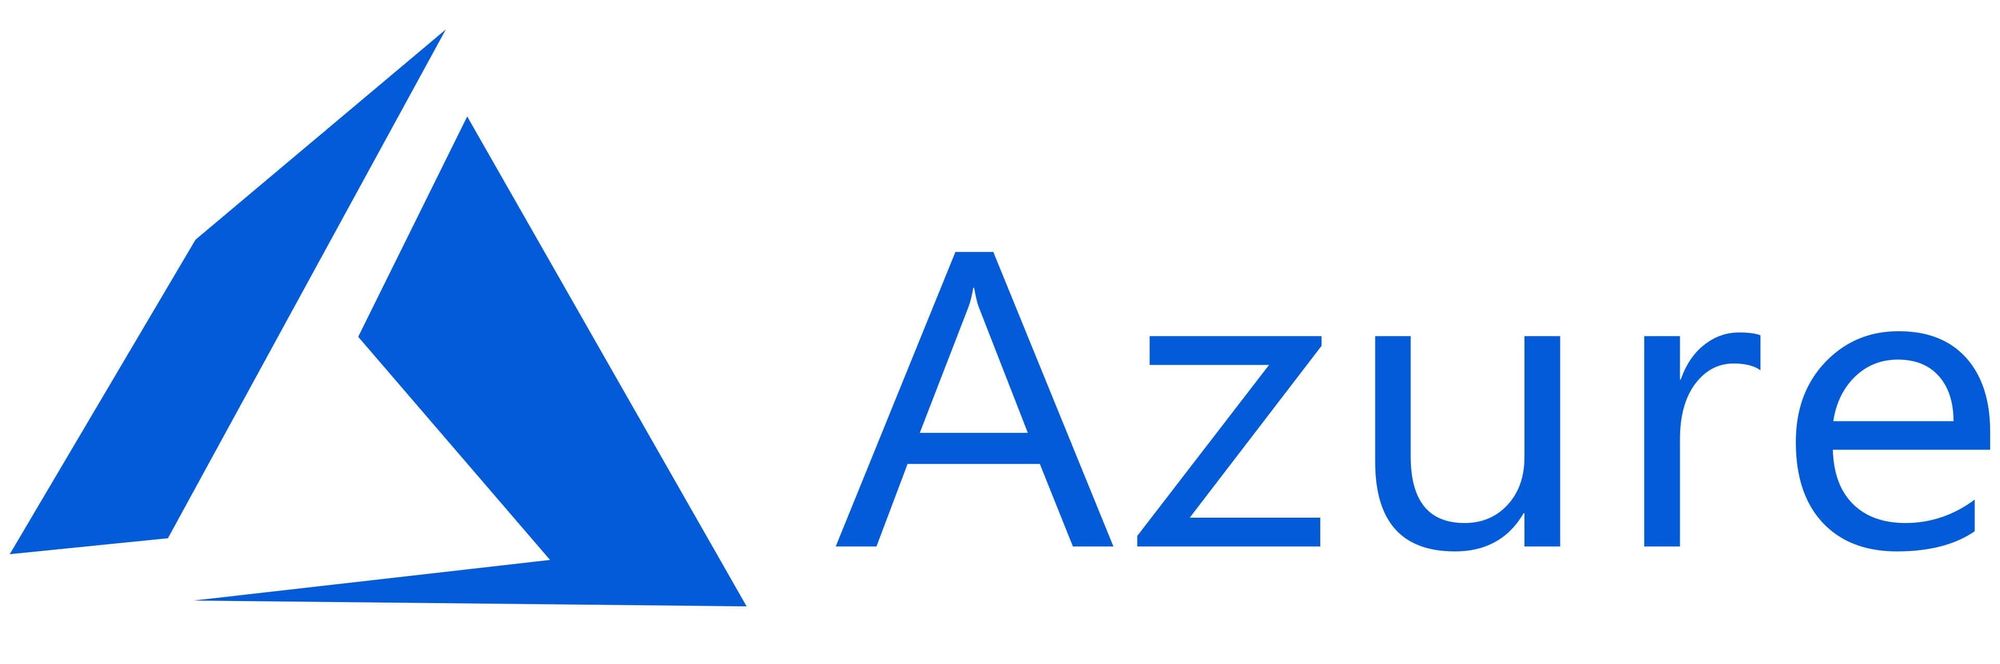 Deploying some AKS Test Application on Azure Stack HCI